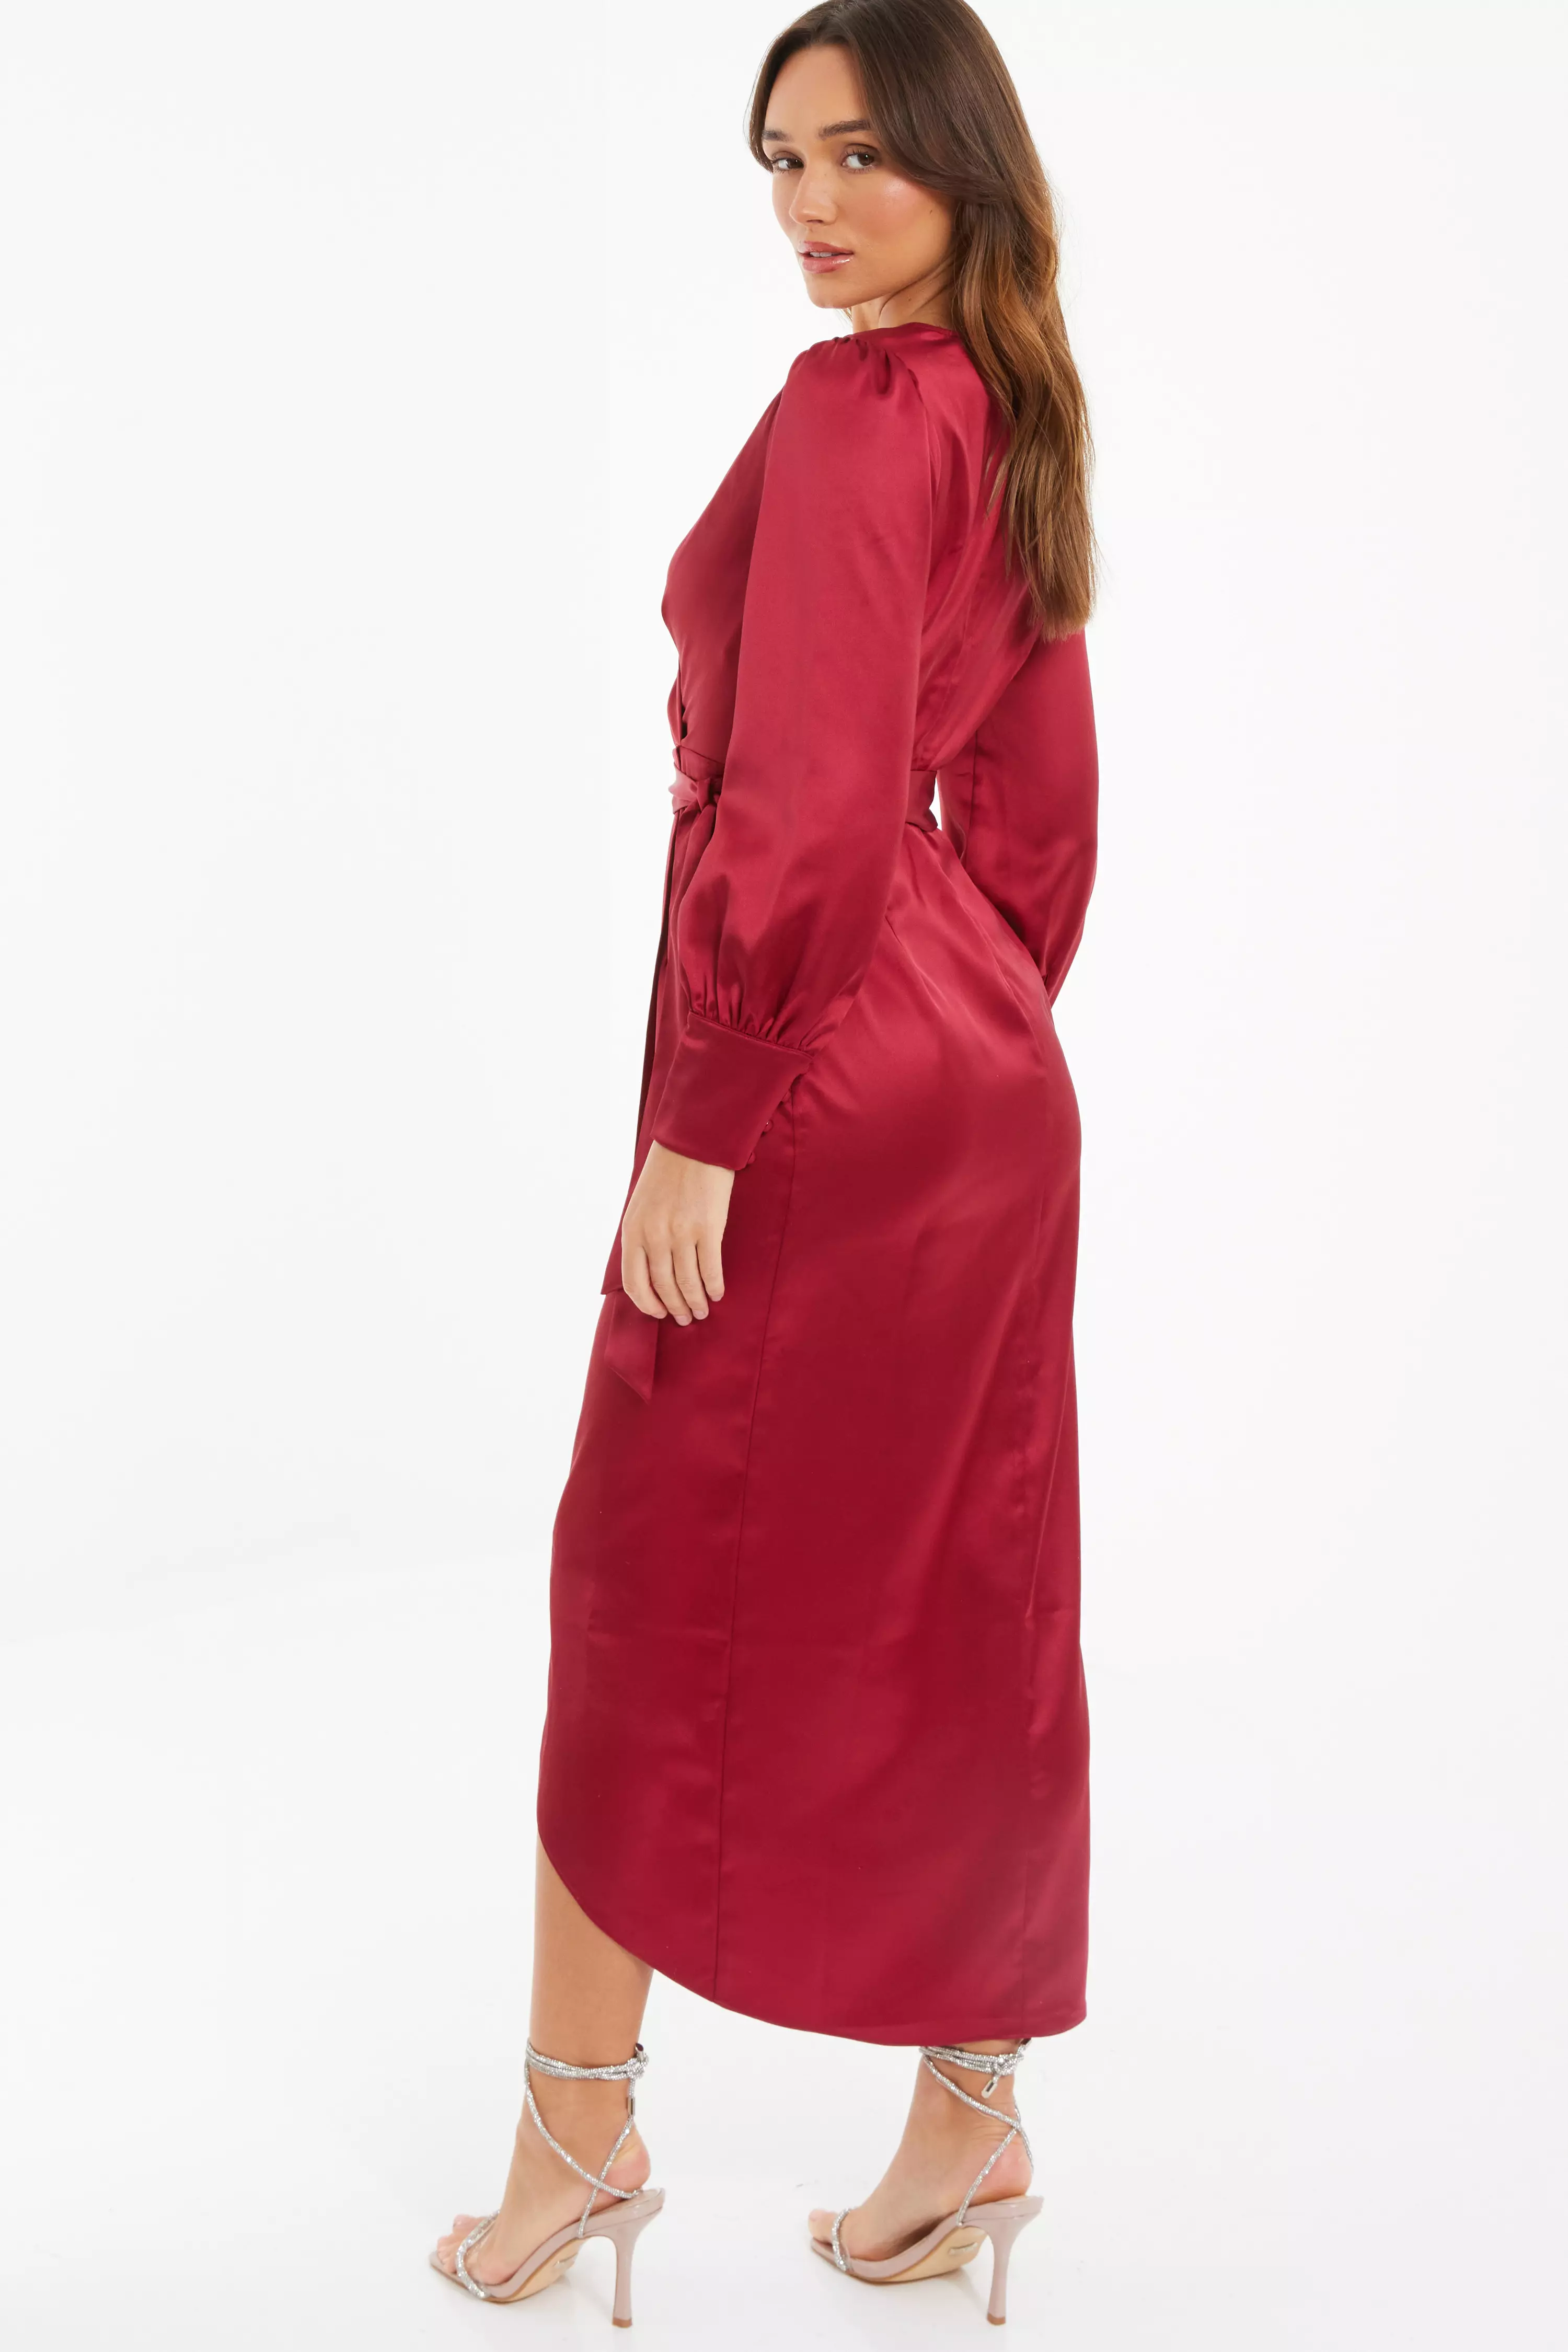 Berry Satin Long Sleeve Wrap Midaxi Dress<!-- --> - <!-- -->QUIZ Clothing